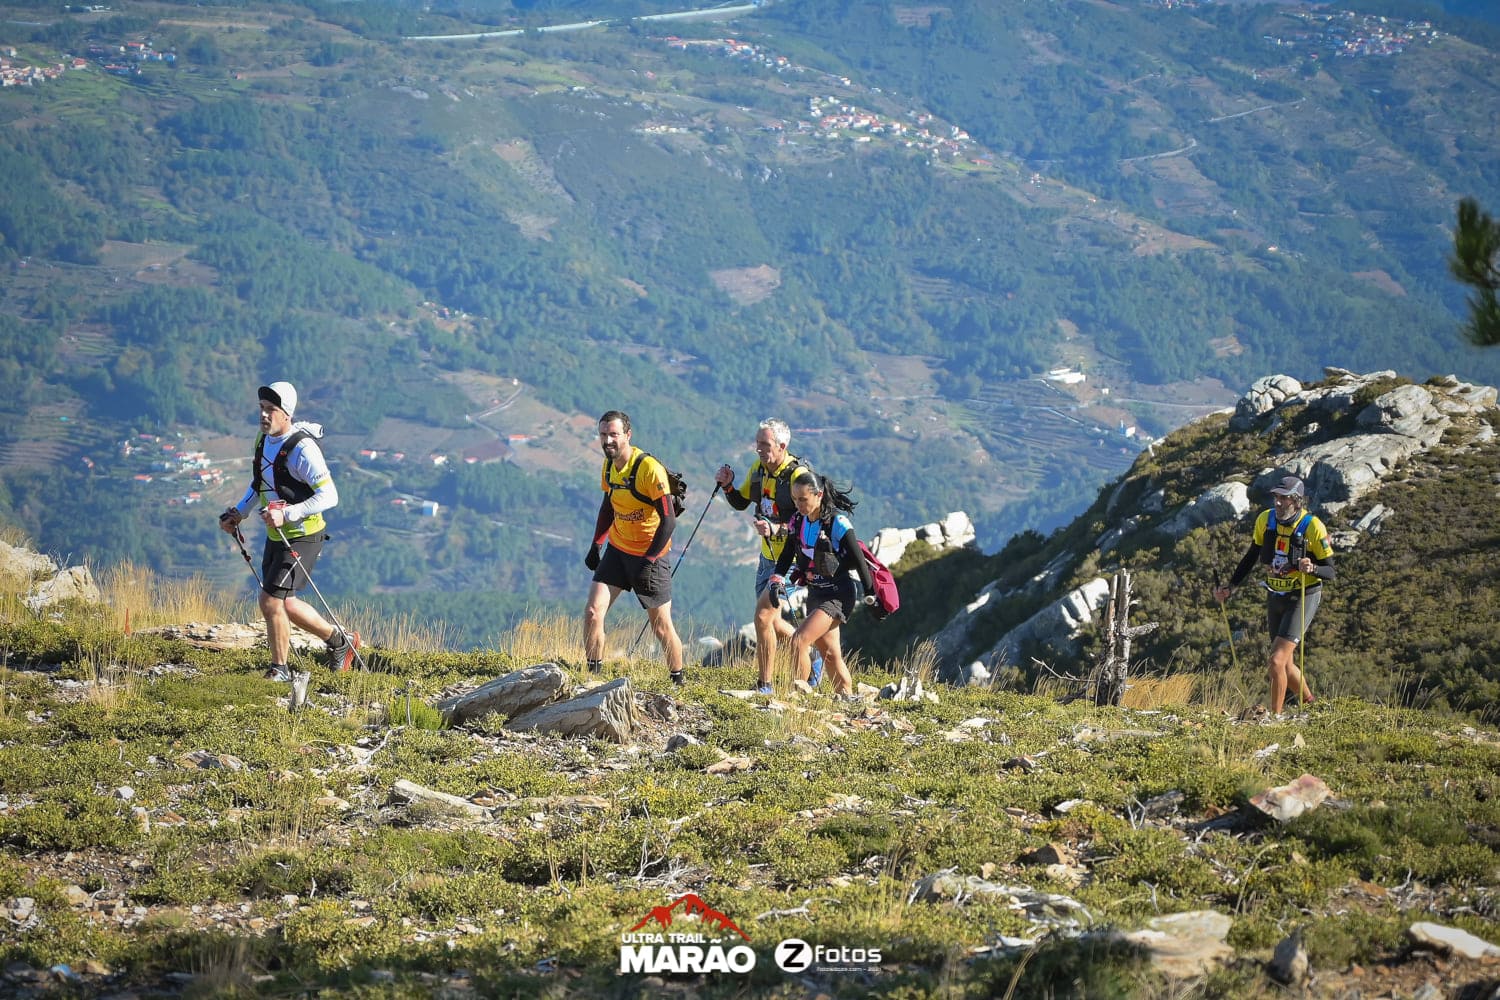 Atleti di trail running in paesaggio di montagna portoghese